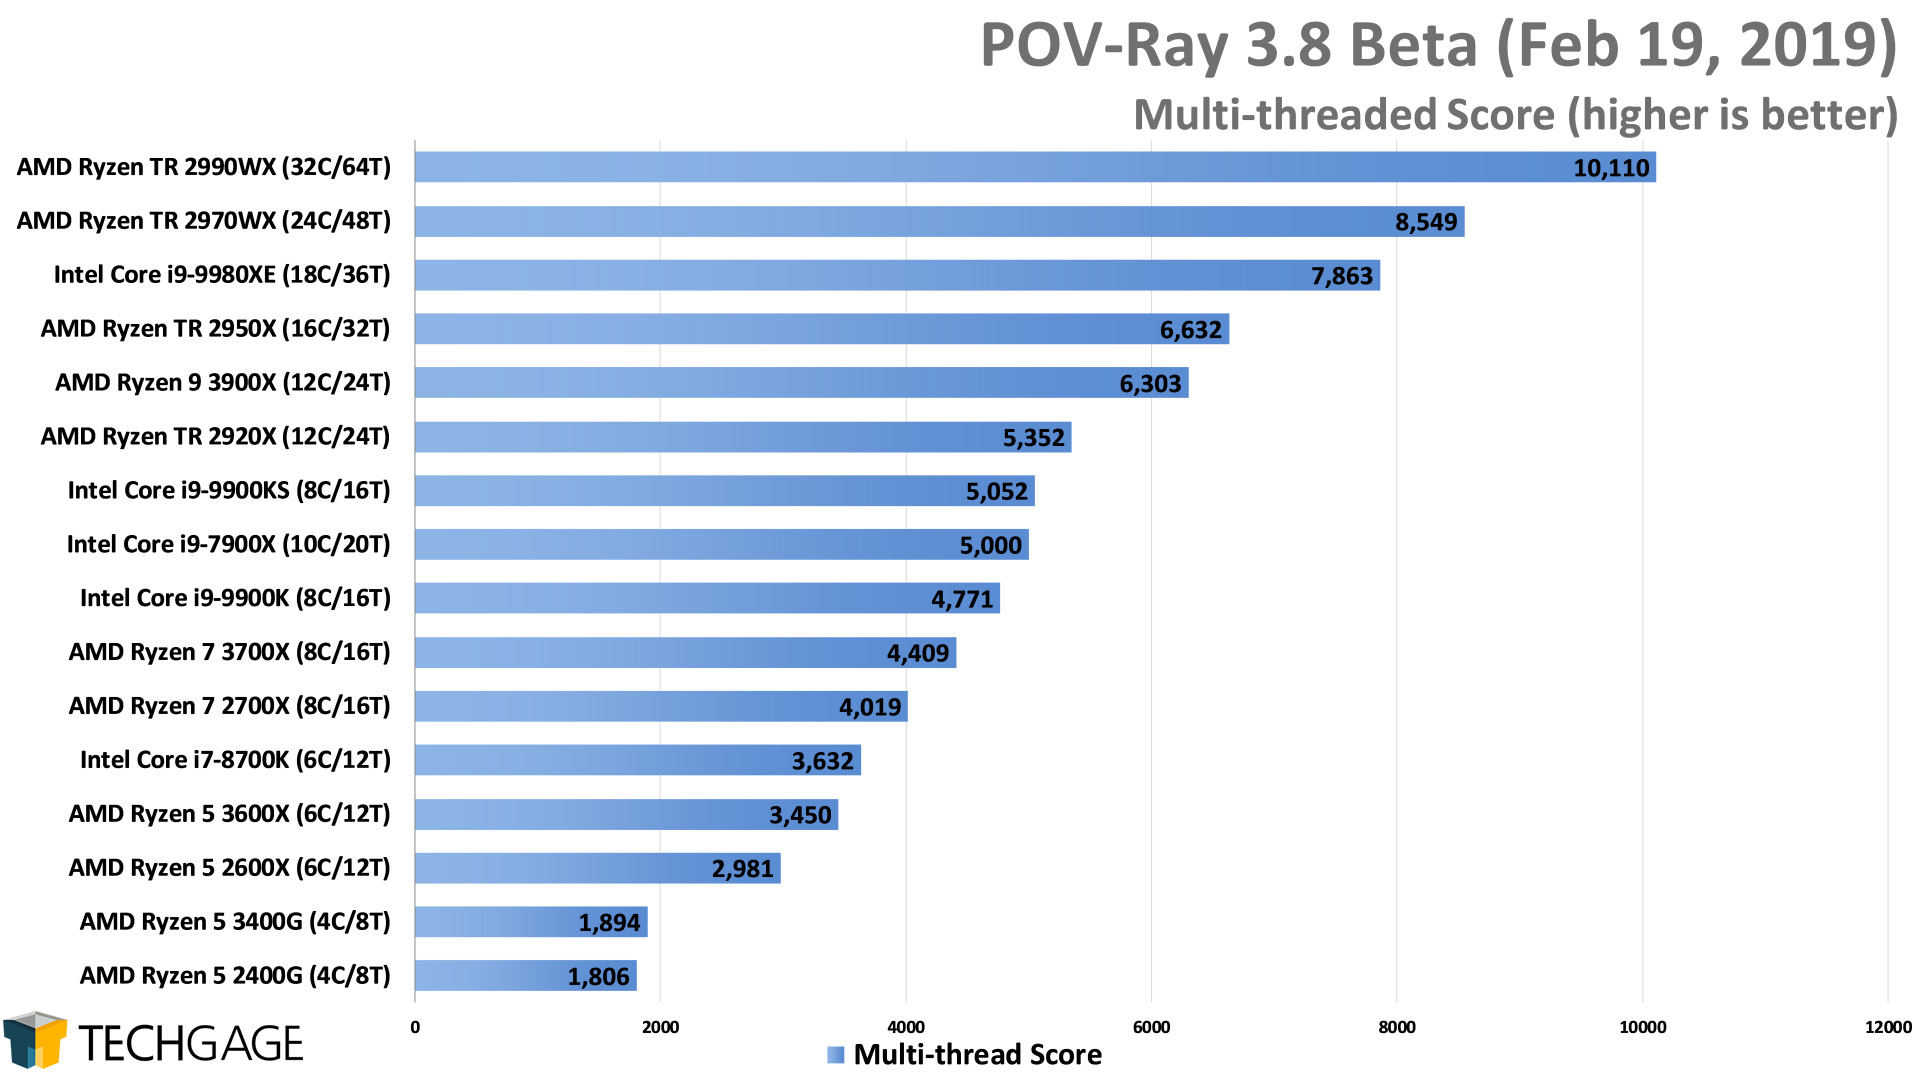 POV-Ray 3.8 Multi-threaded Score (Intel Core i9-9900KS)